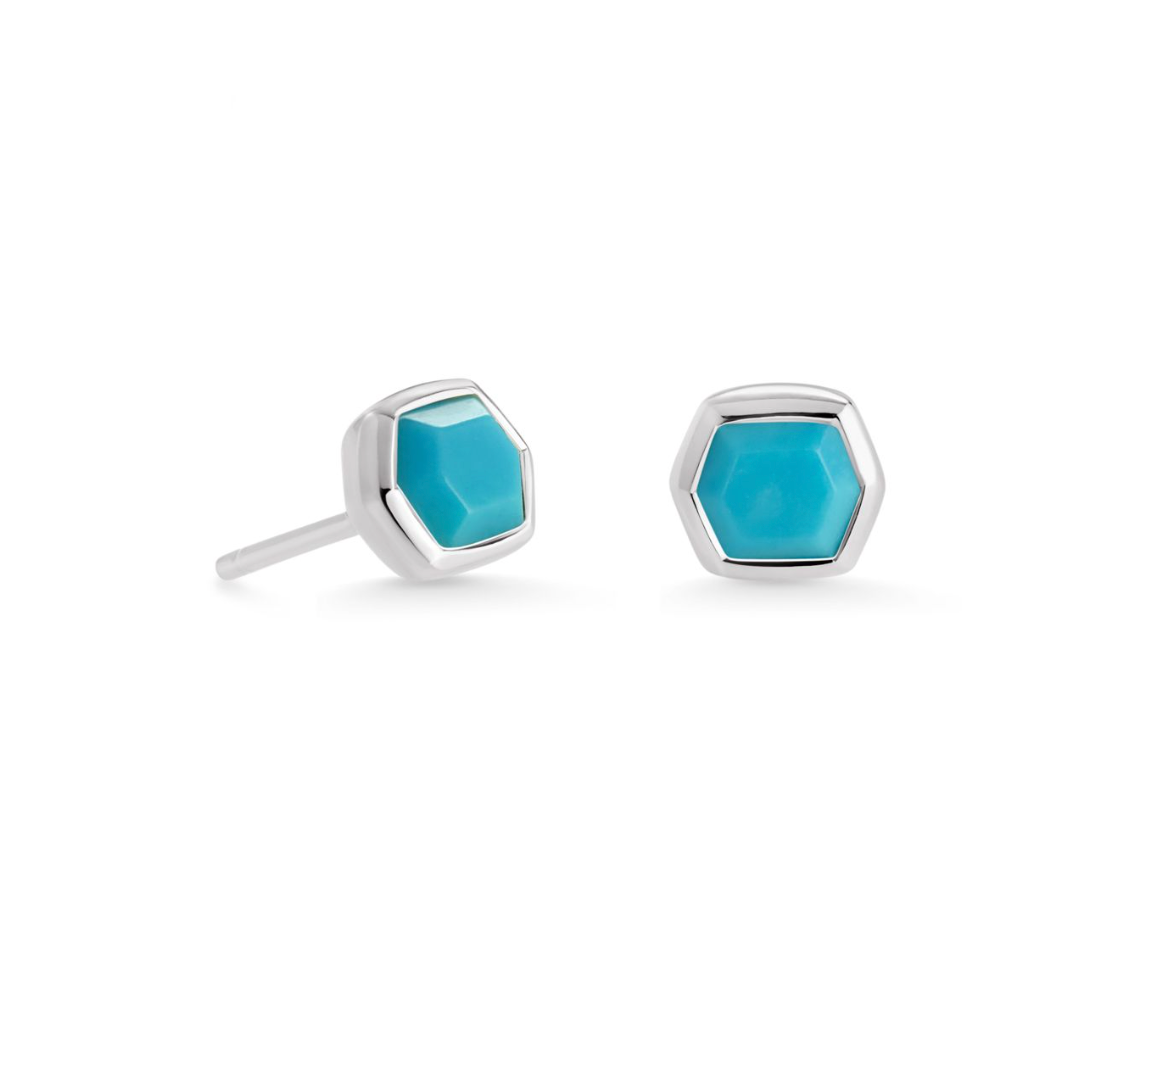 Davie Sterling Silver Stud Earrings in Turquoise | KENDRA SCOTT - The Street Boutique 